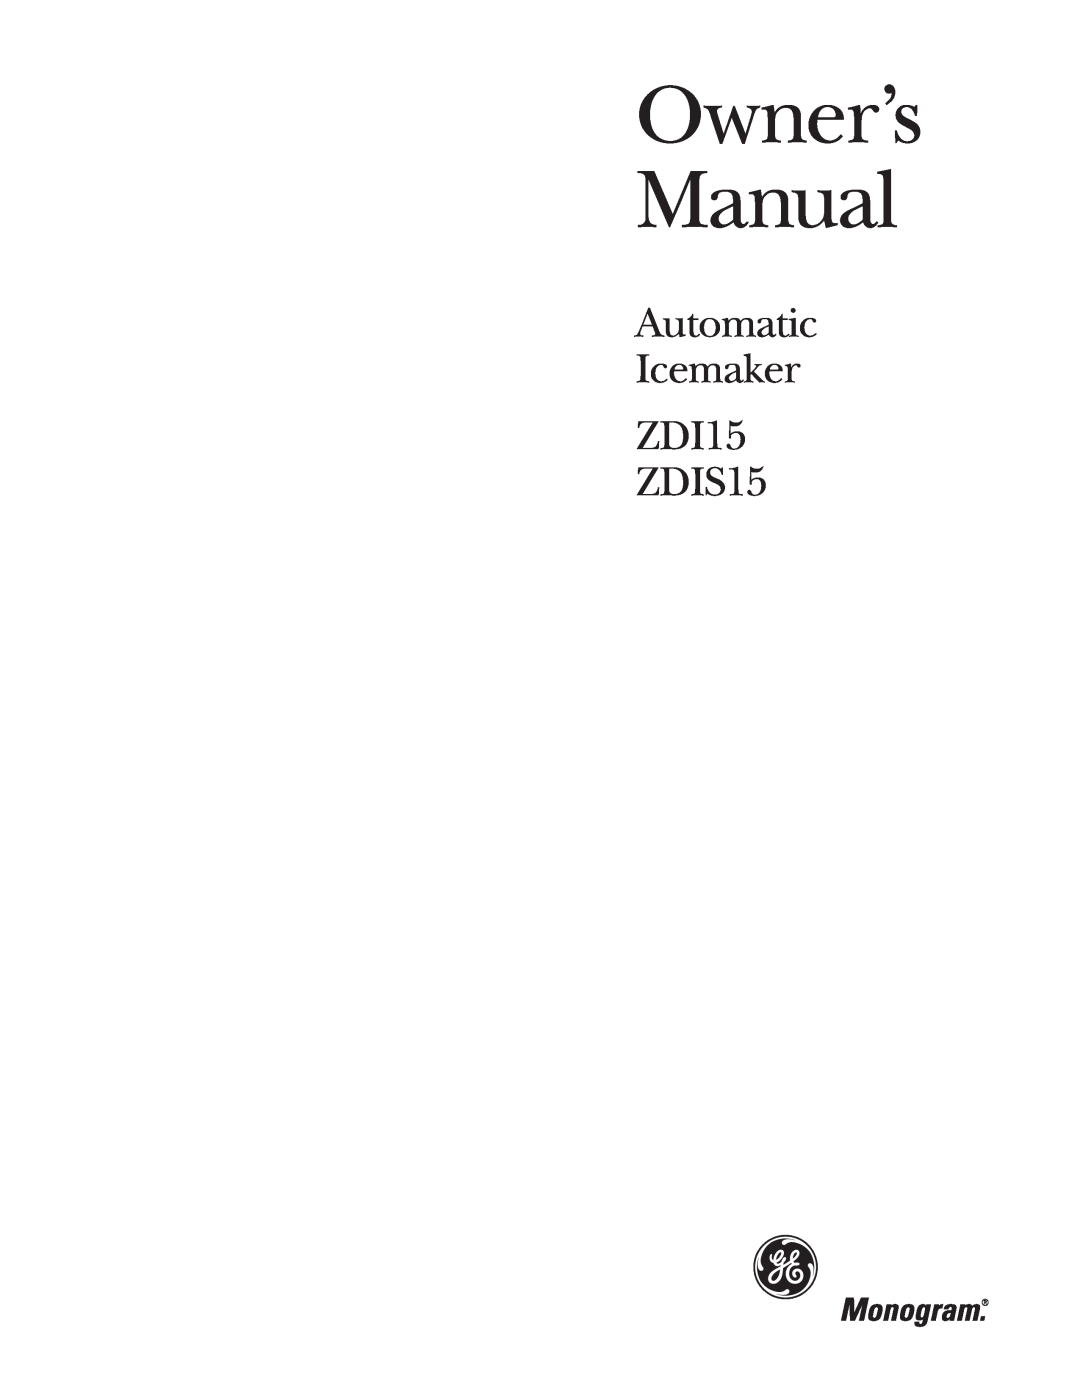 GE Monogram owner manual Owner’s Manual, Automatic Icemaker ZDI15 ZDIS15 